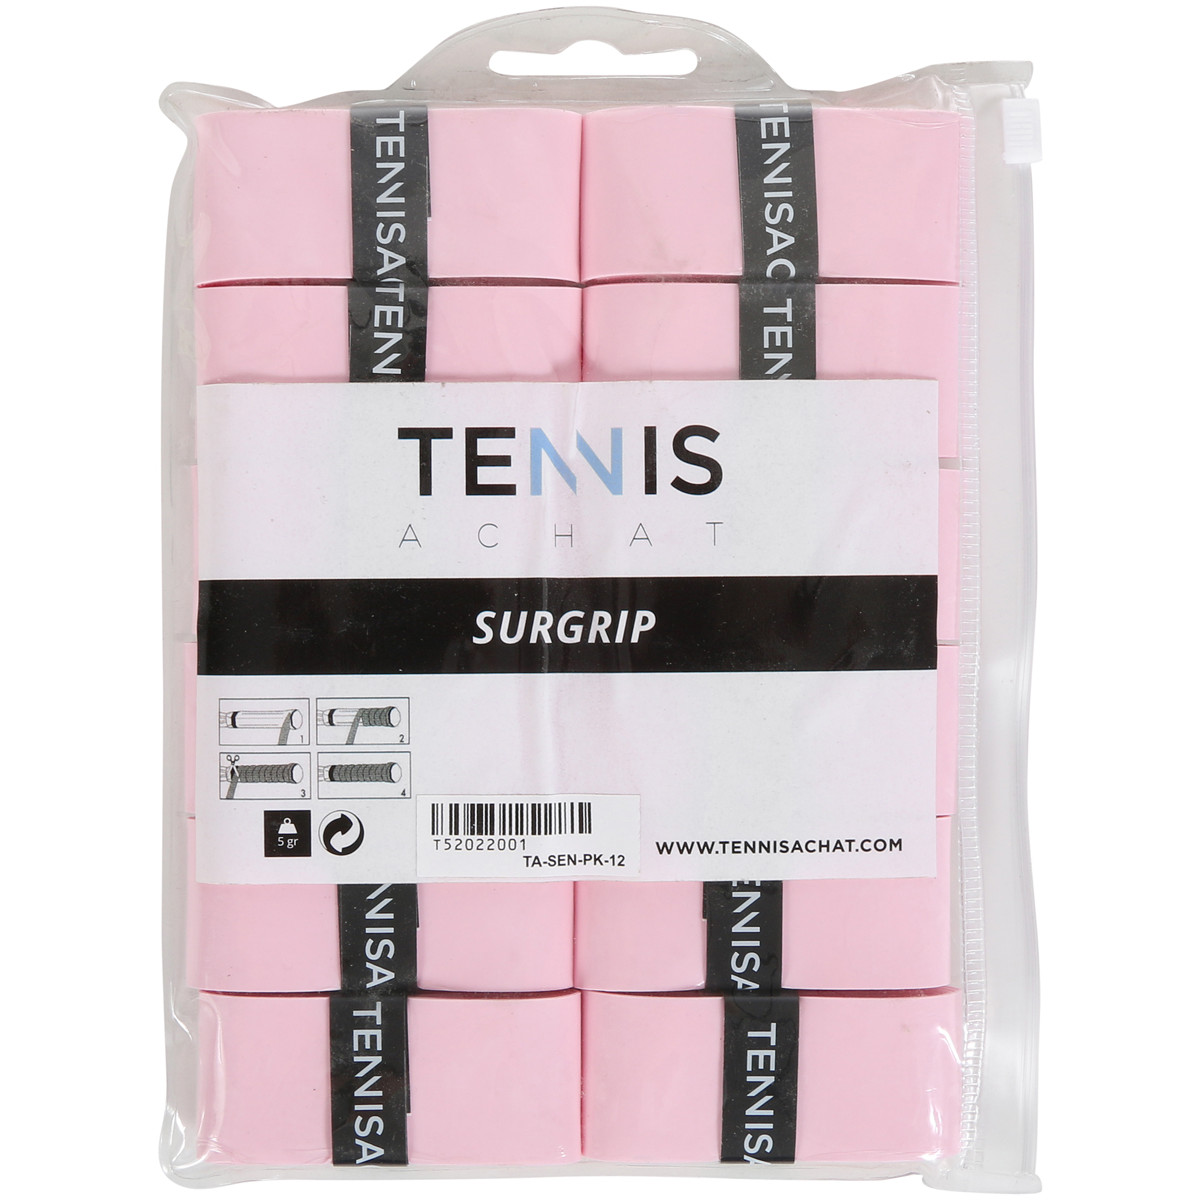 12 Surgrips Tennis Achat Sensation Roses - - Tennis Achat